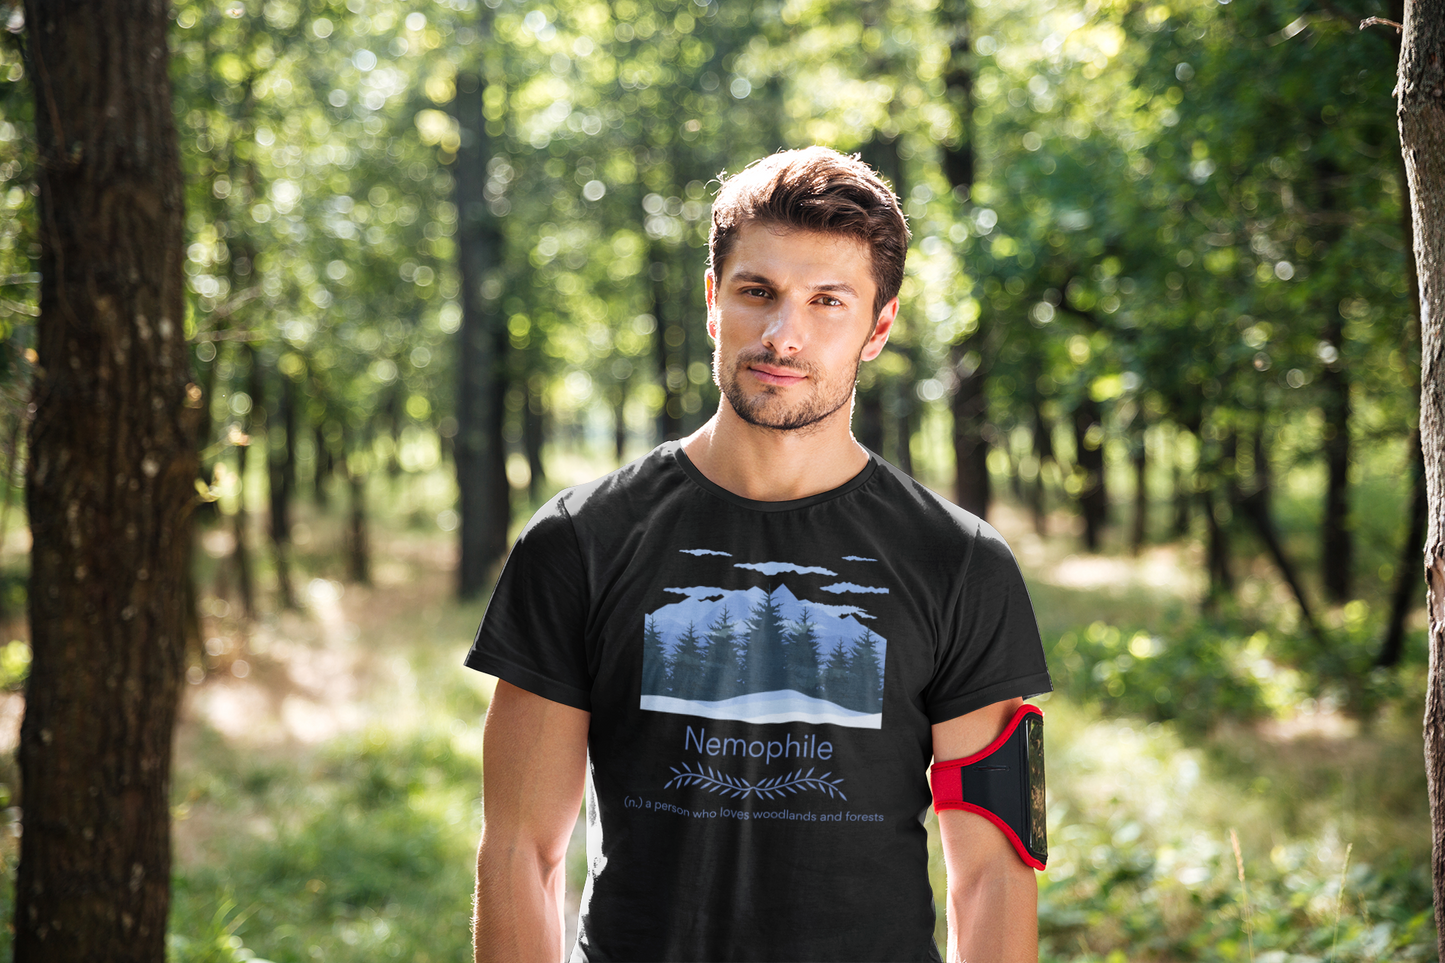 Nemophile - forest lover T-shirt